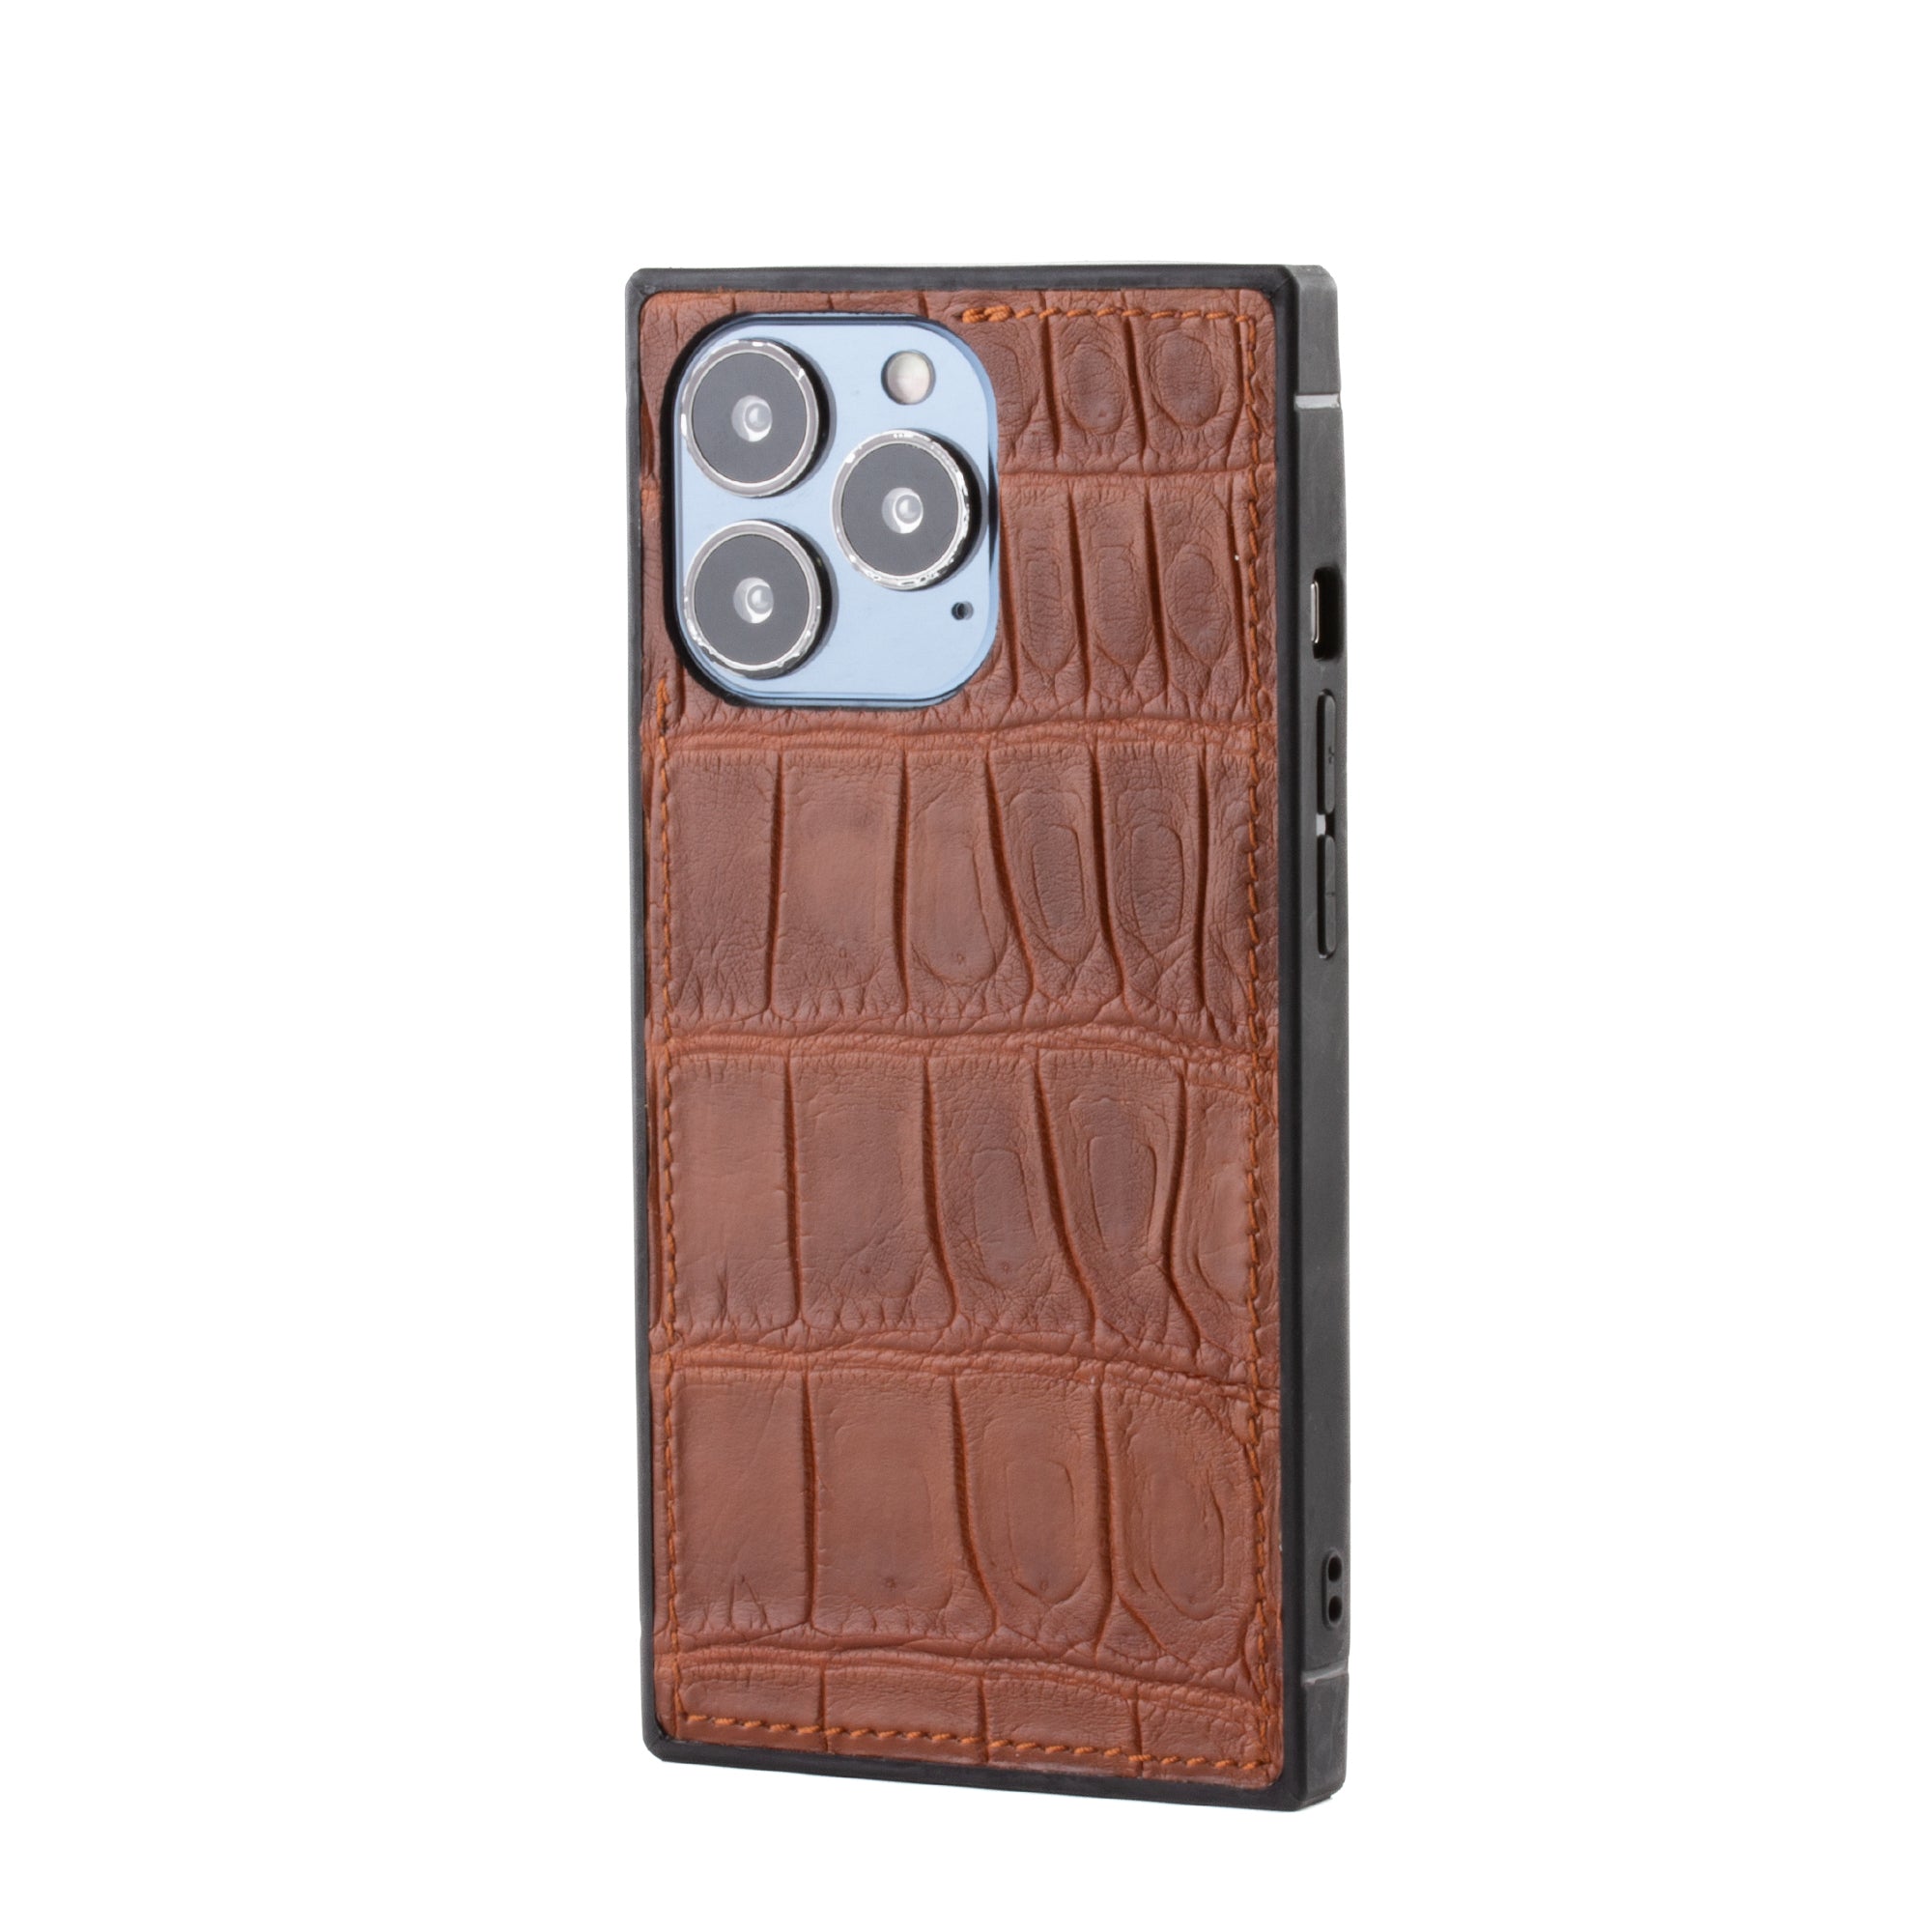 Vente exclusive - Coque "Square case" cuir pour iPhone 13 Pro - Alligator marron 2